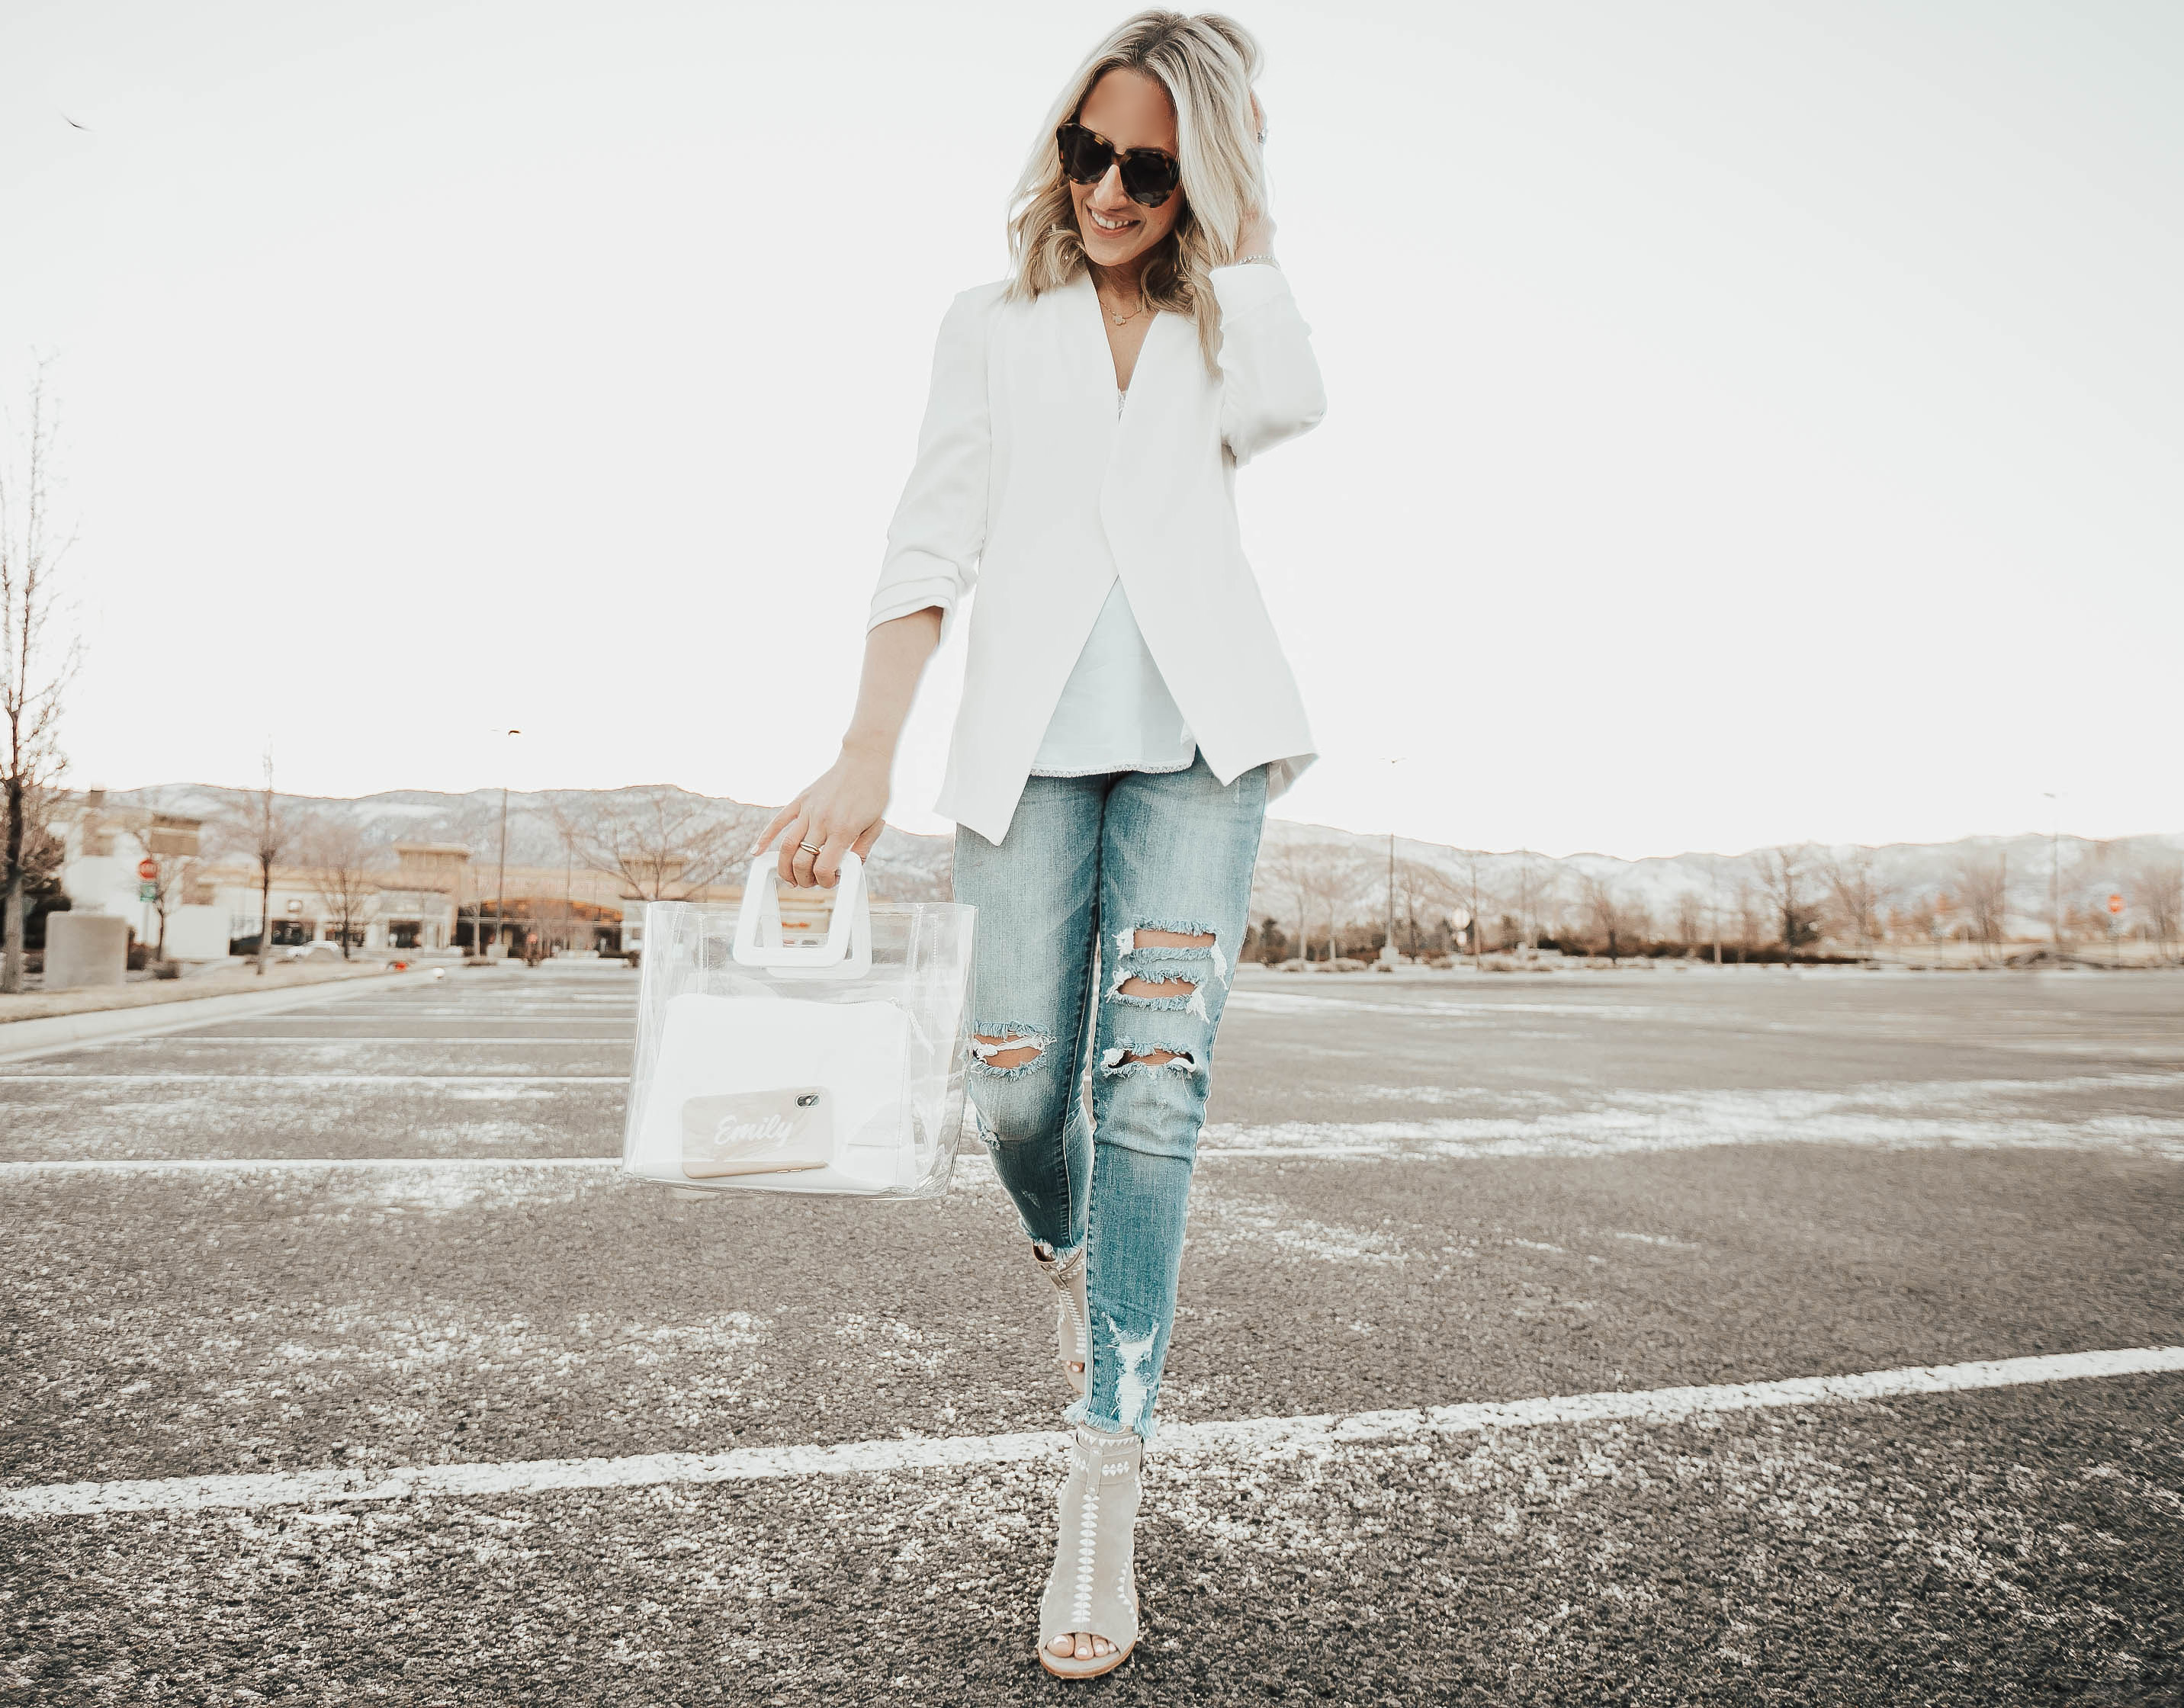 Reno, Nevada Blogger, Emily Farren Wieczorek shares her new favorite shoes - these Grey Embroidered Heels from Bernardo via Zappos.